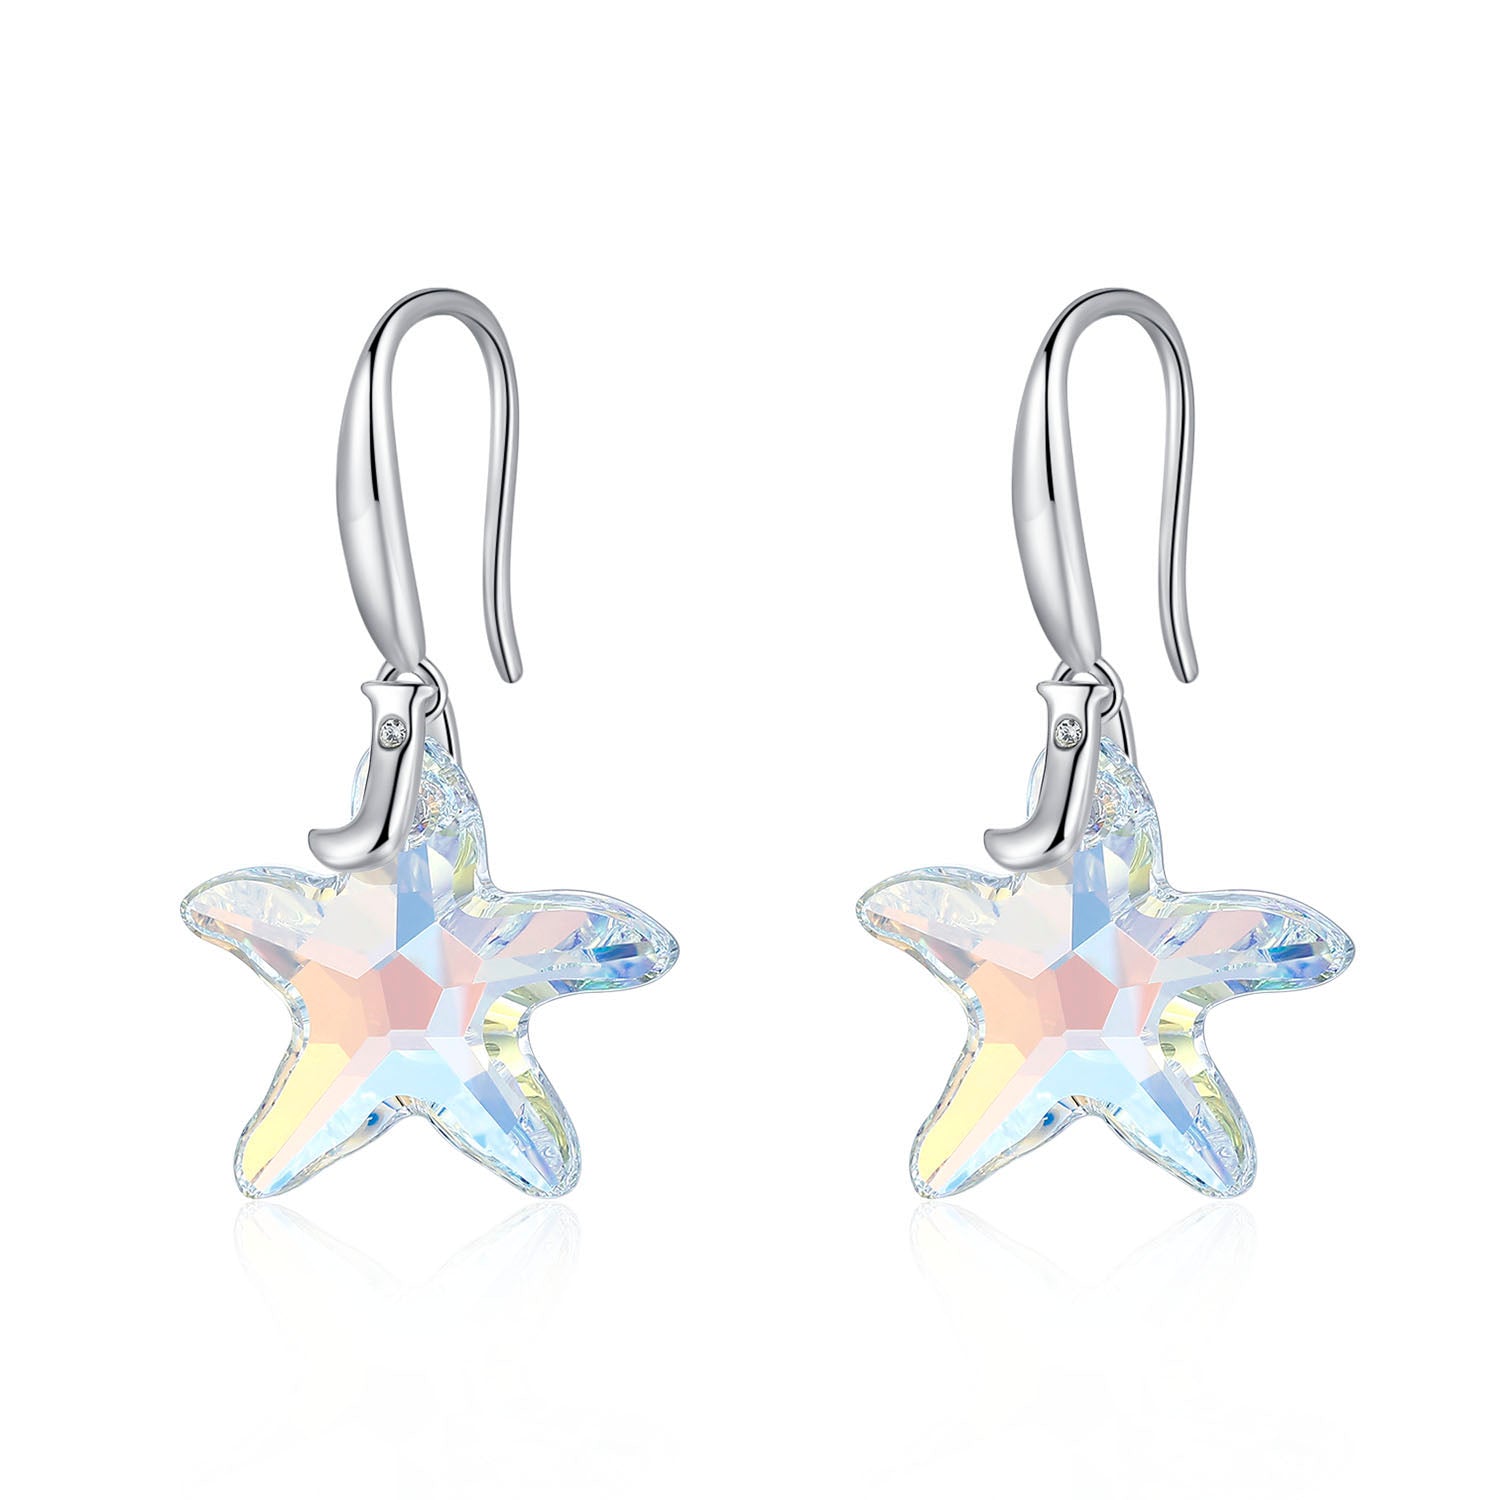 Planet J 925 Sterling Silver Ocean Star Earrings with Swarovski Elements Crystals